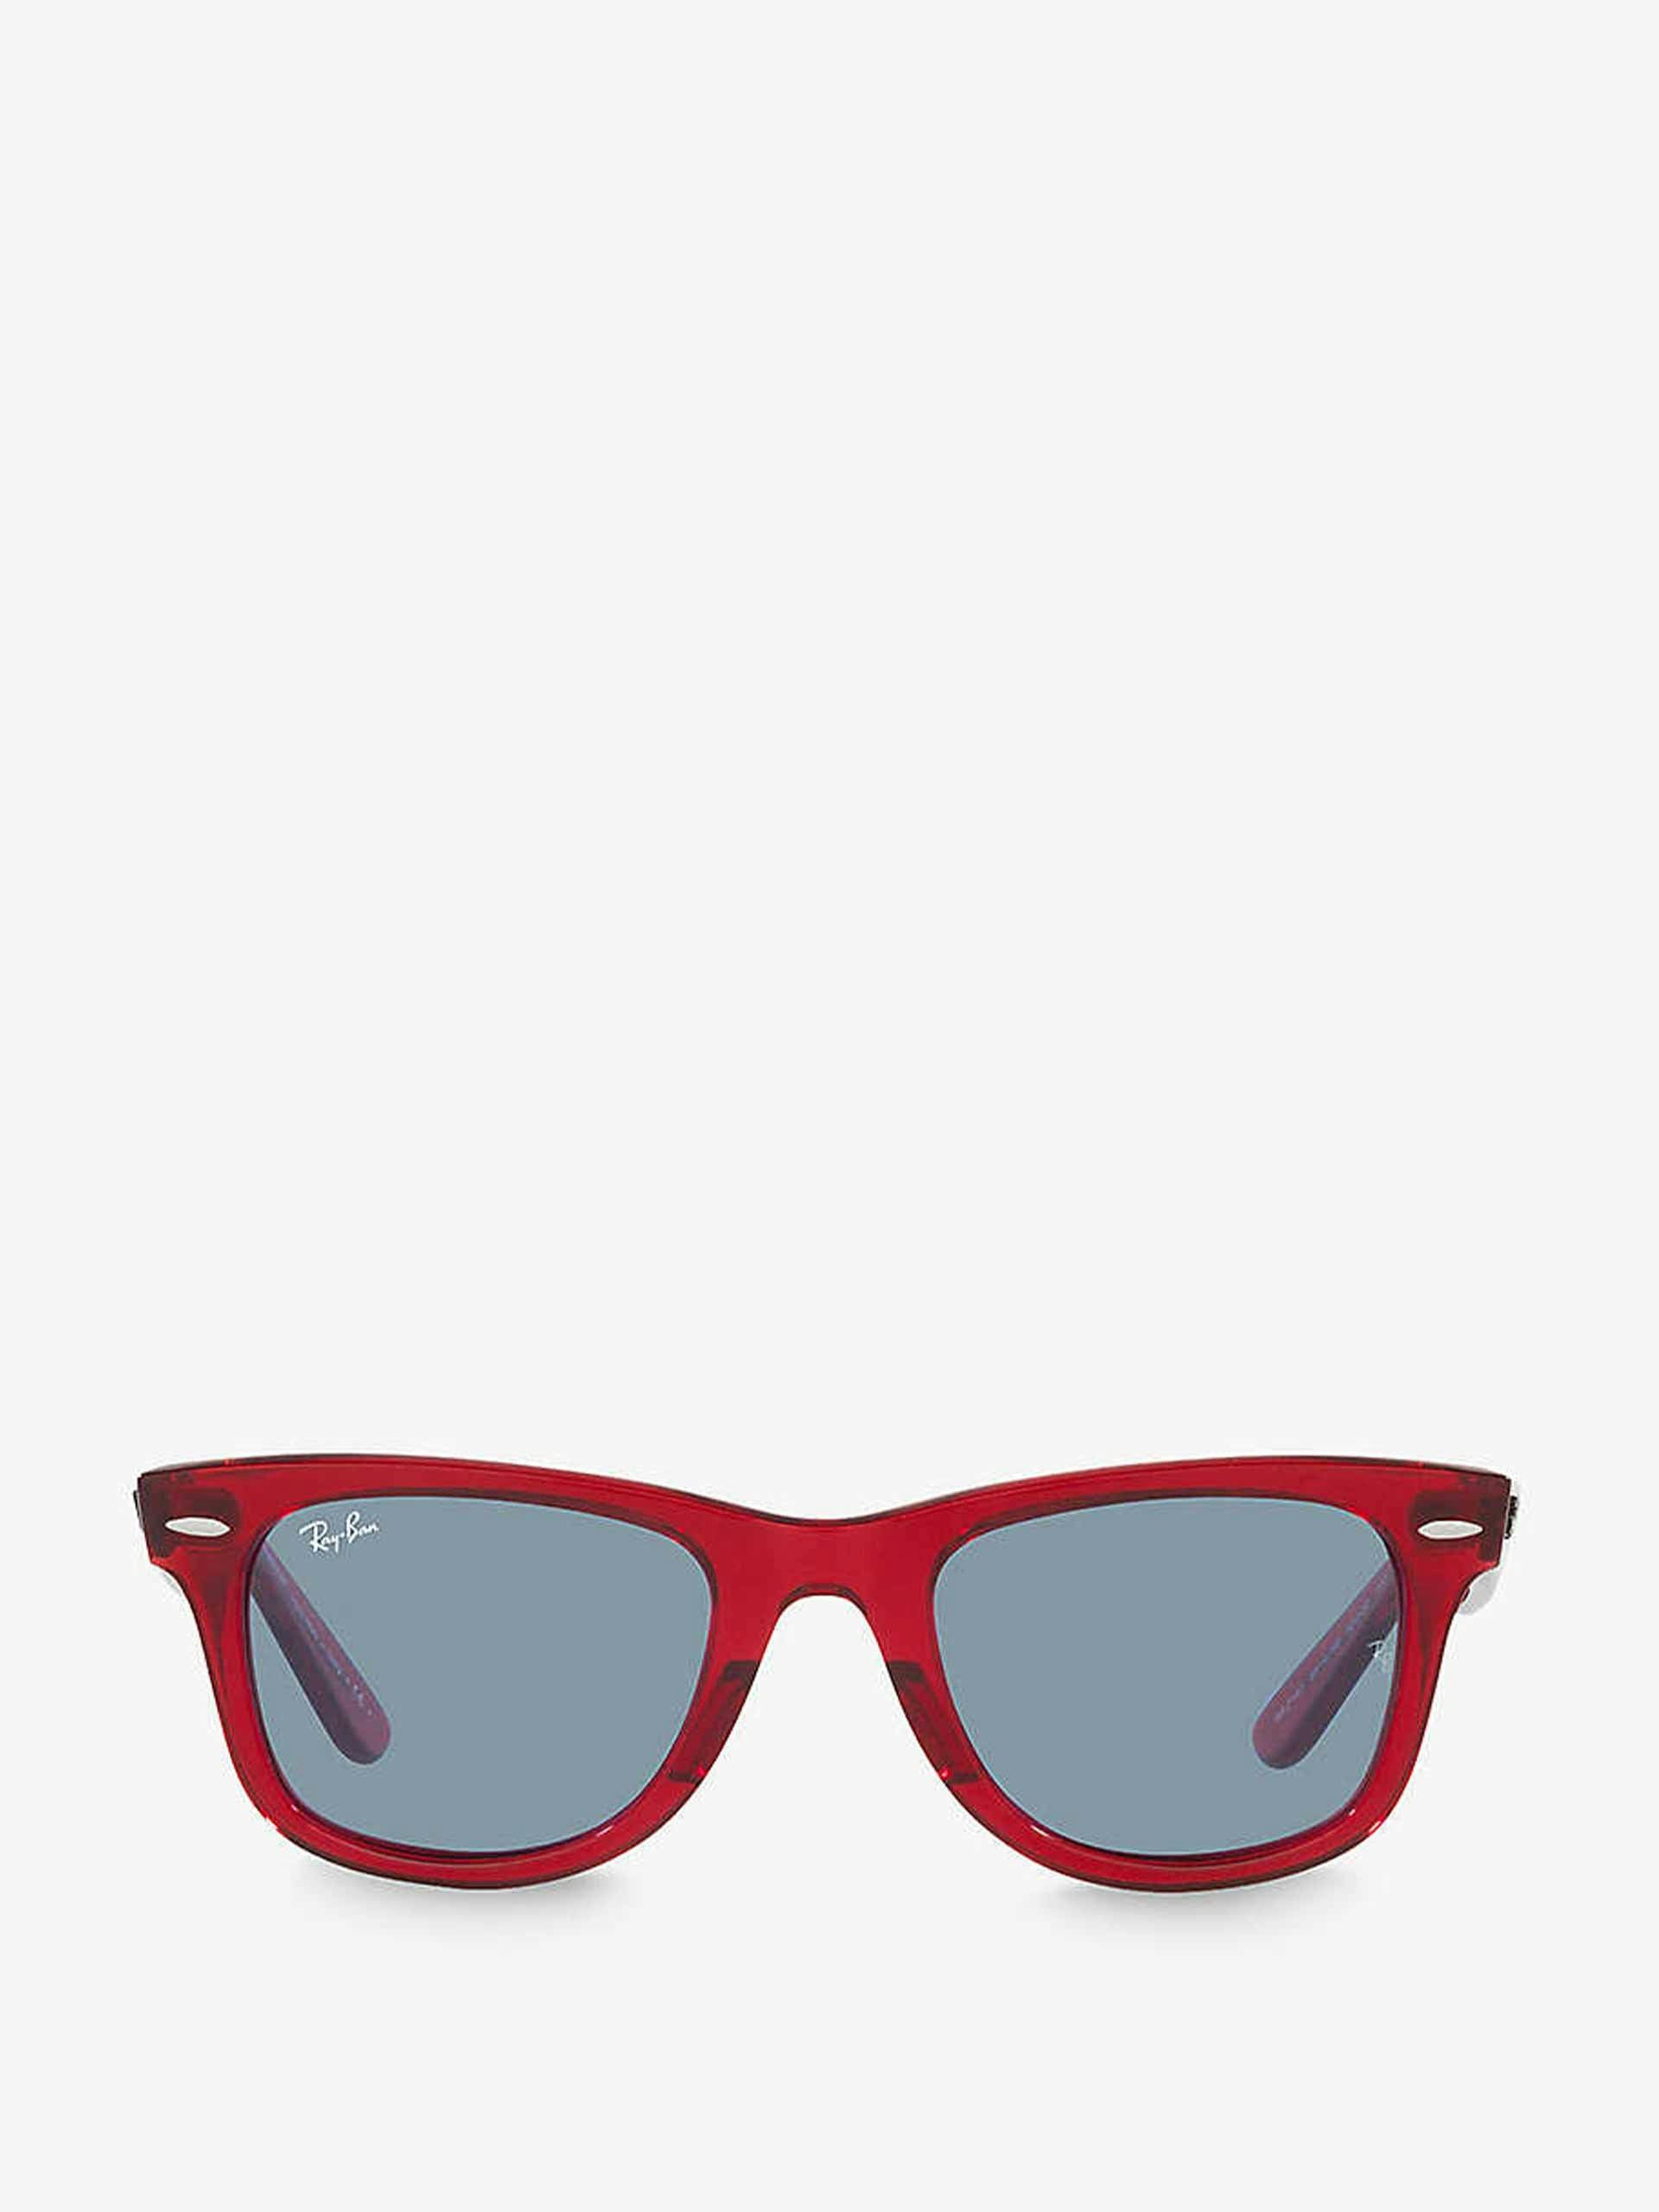 Red square-frame sunglasses